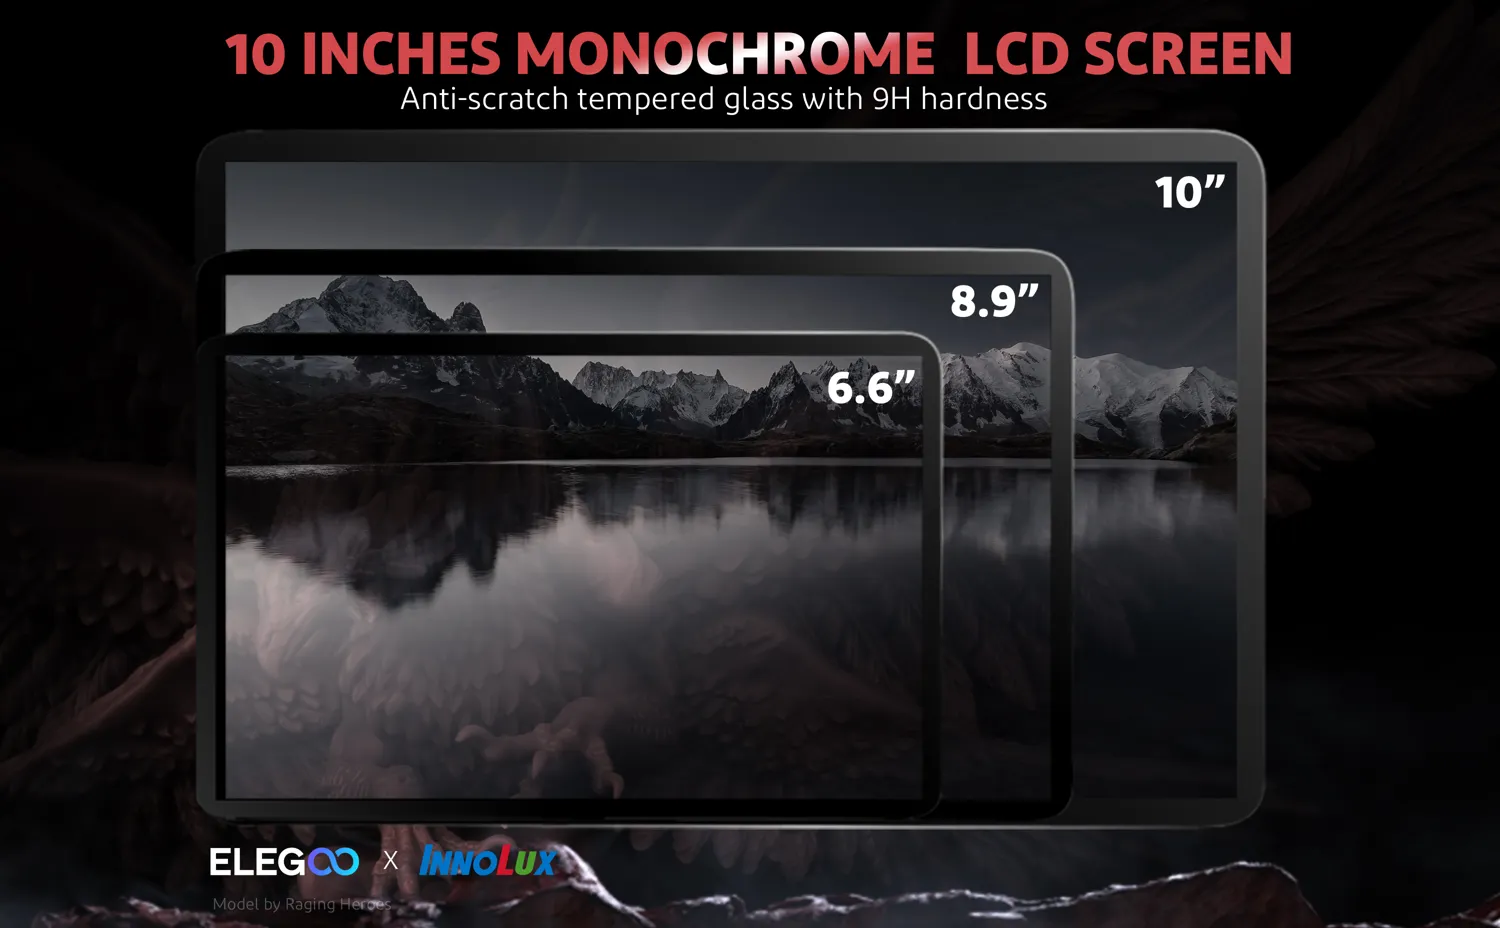 10 inches monochrome lcd screen